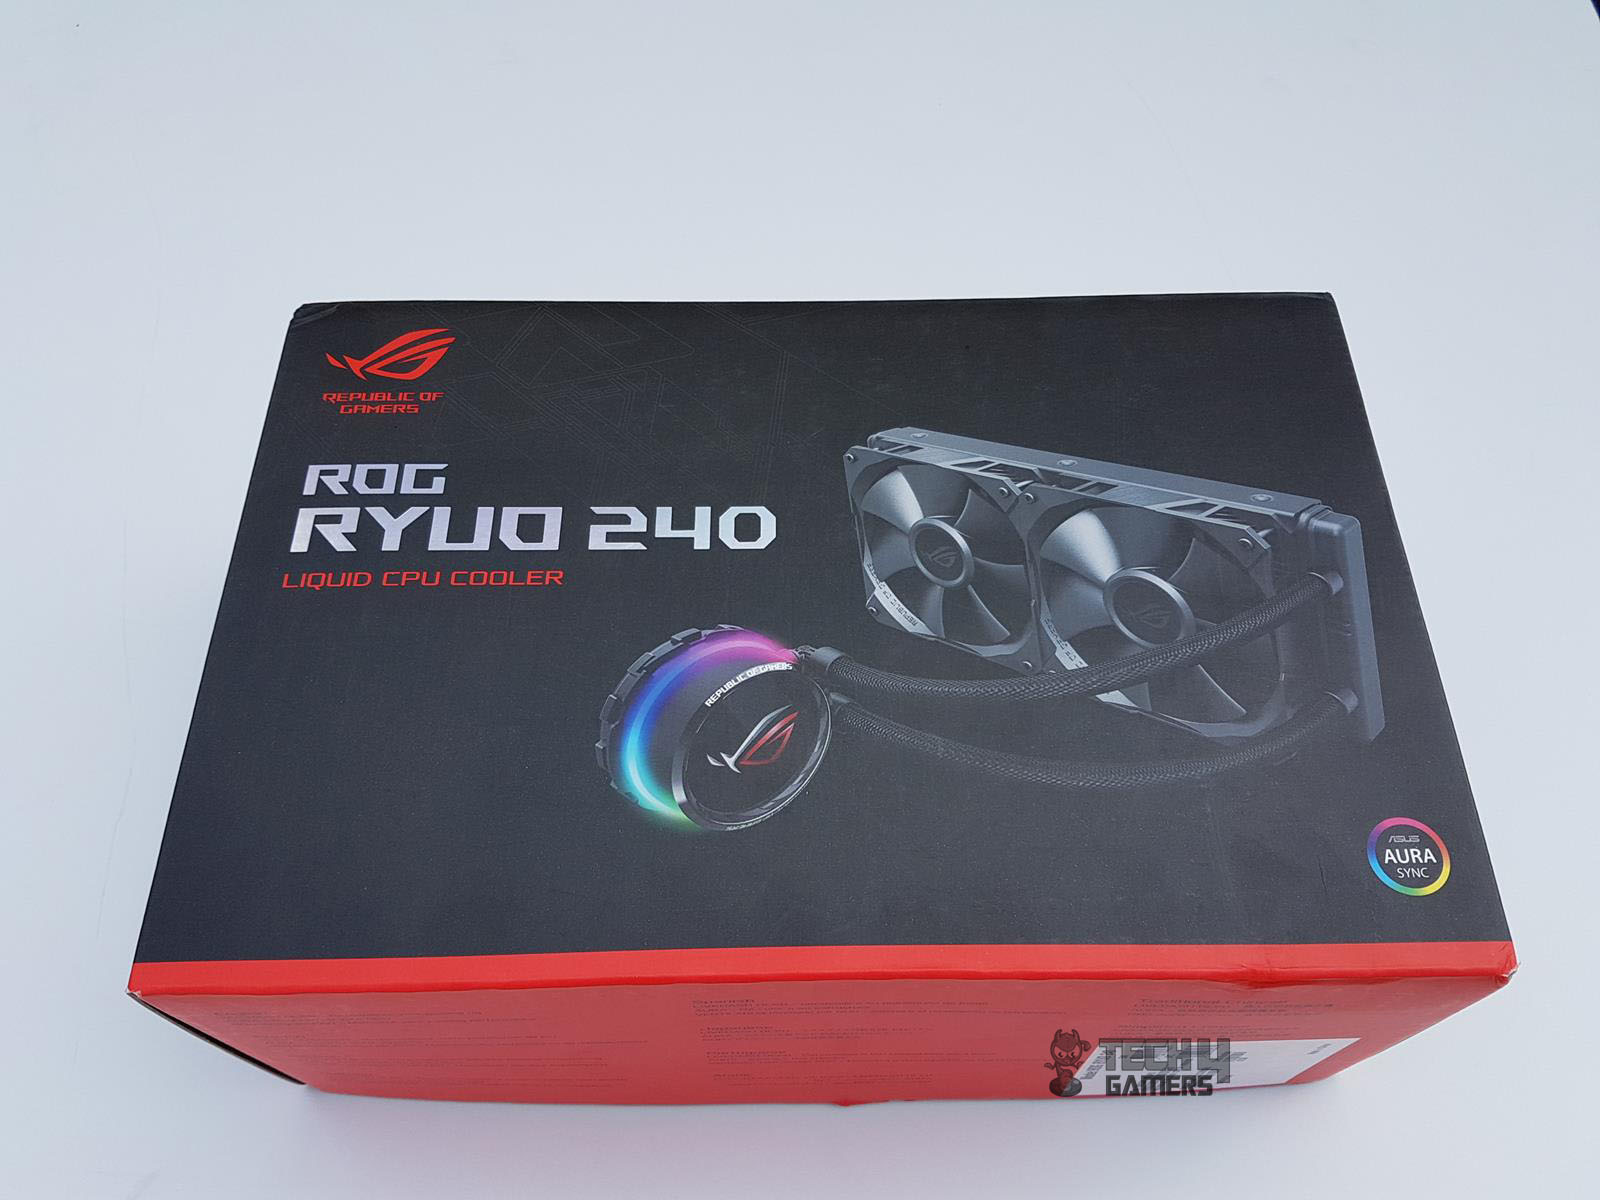 ASUS ROG Ryuo 240 CPU Liquid Cooler Review — Packaging